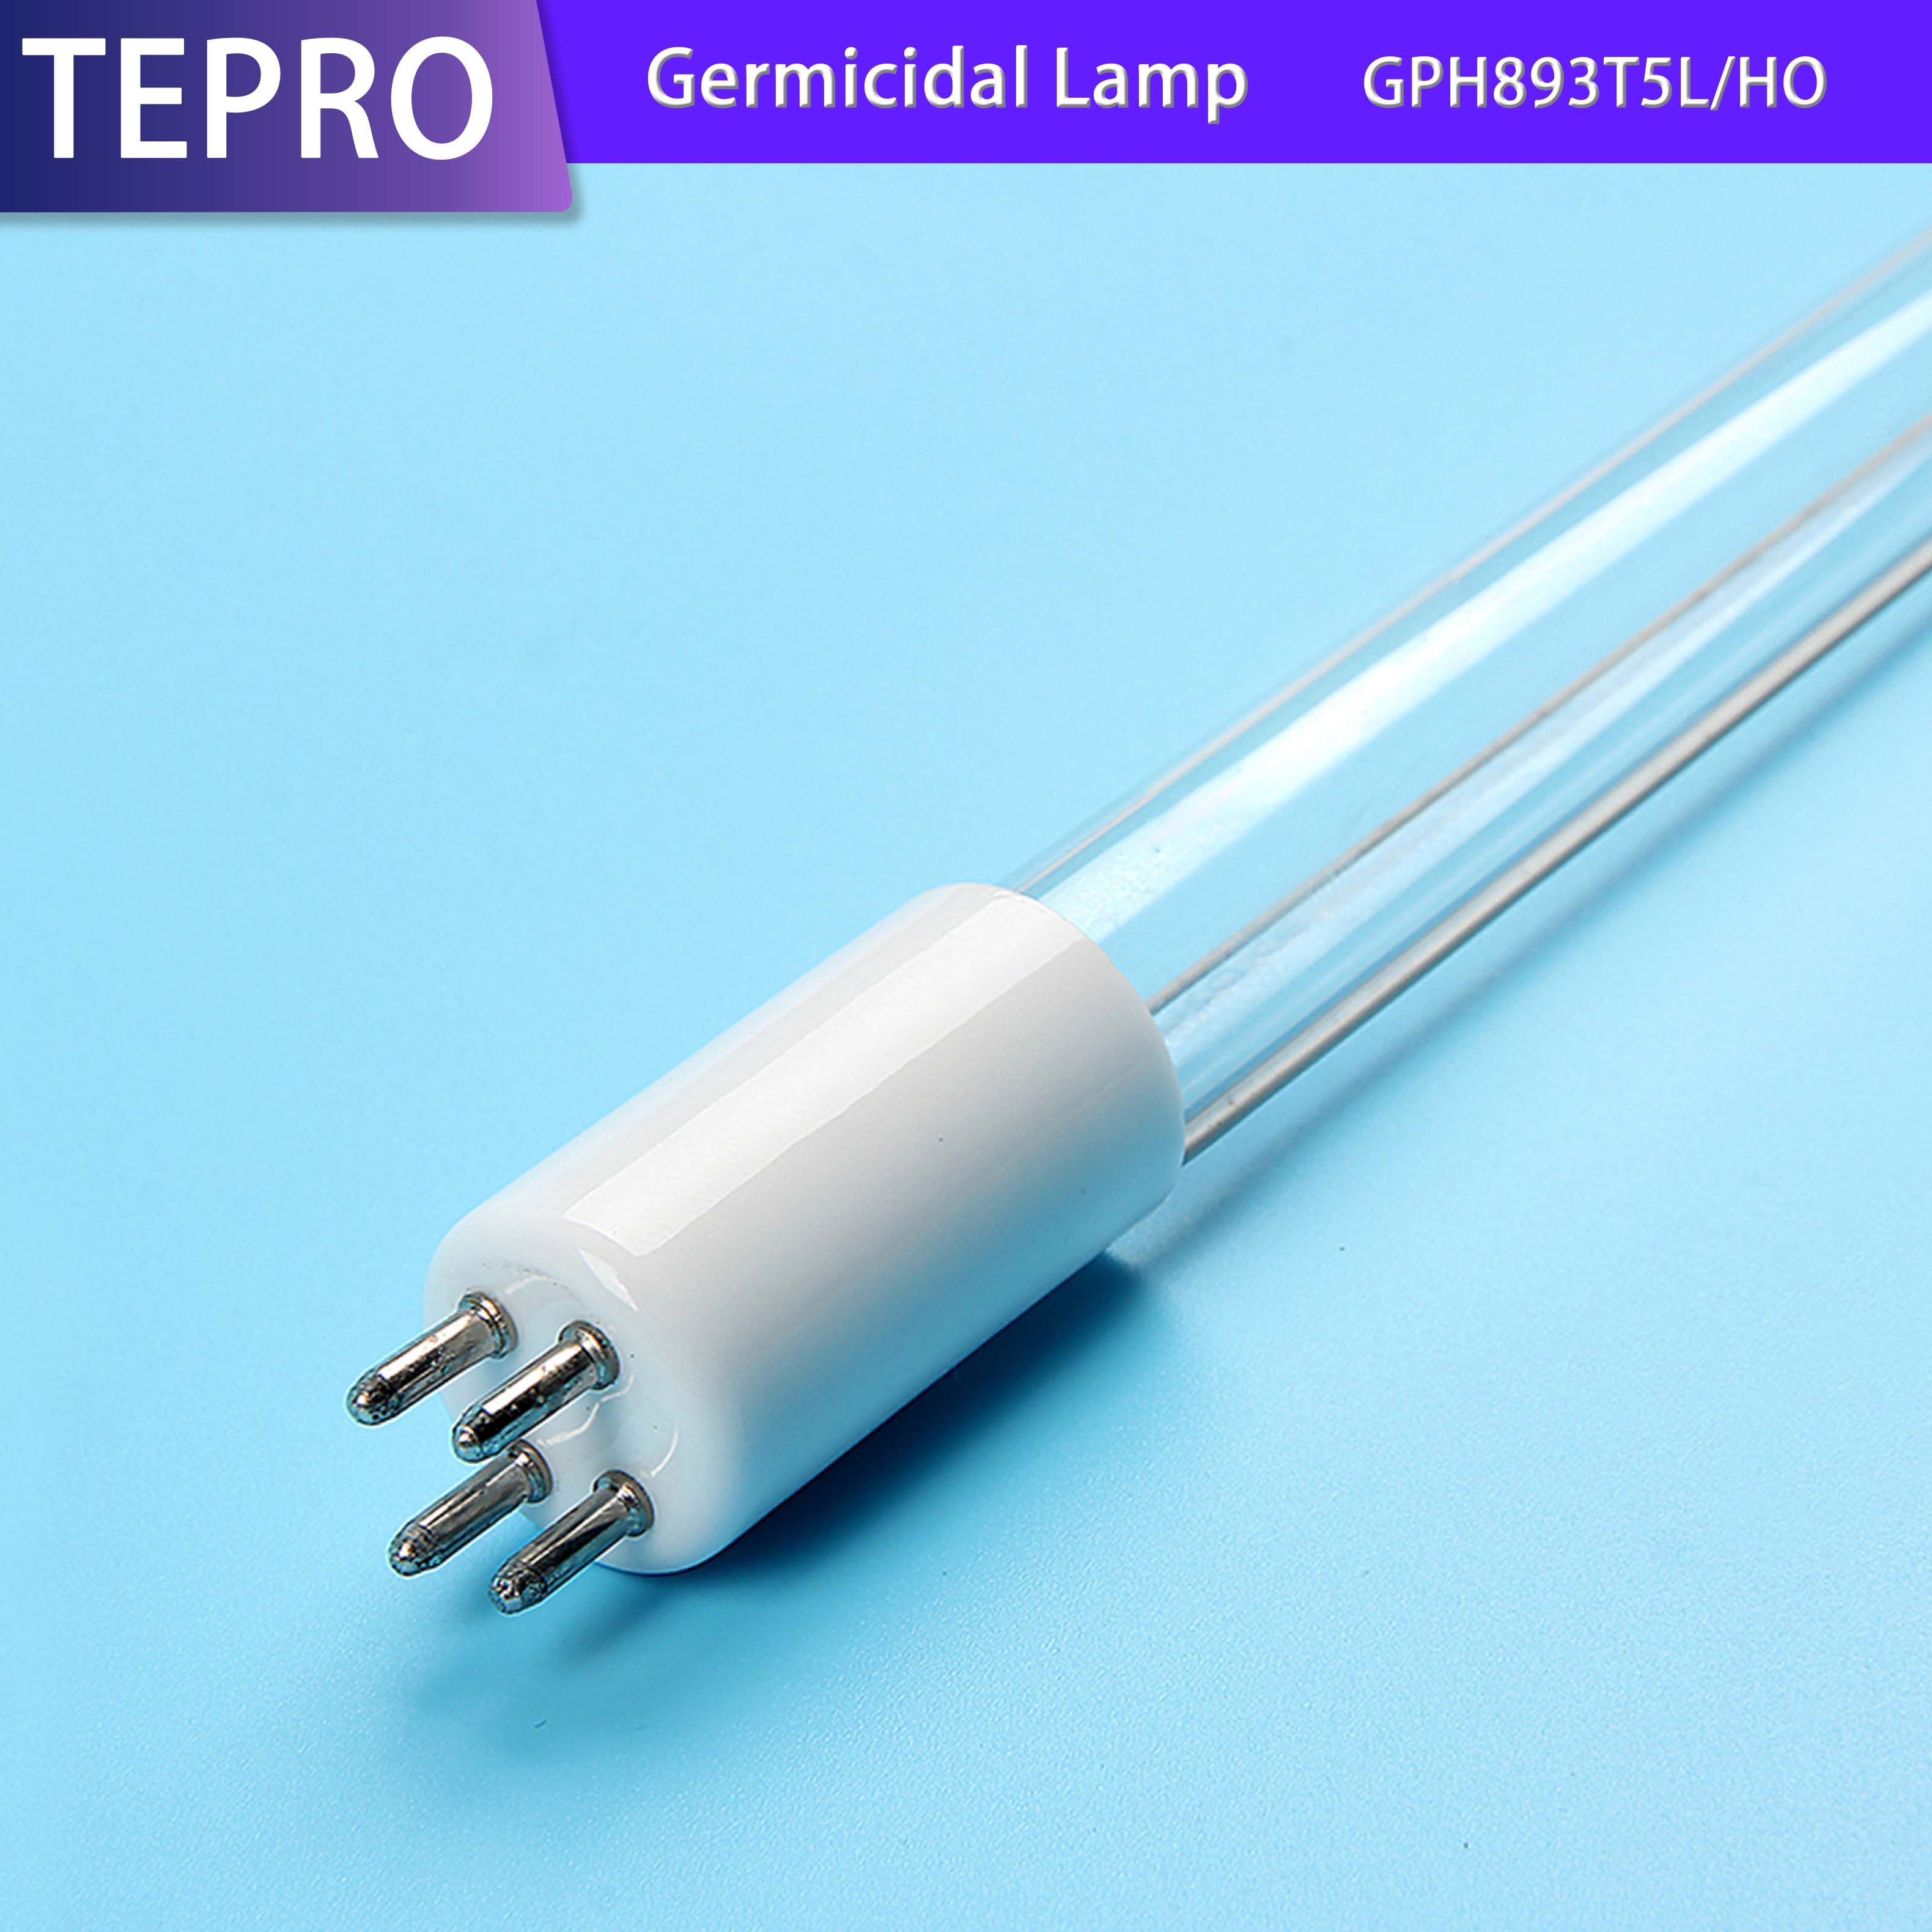 Tepro-uv curing light | PRODUCTS | Tepro